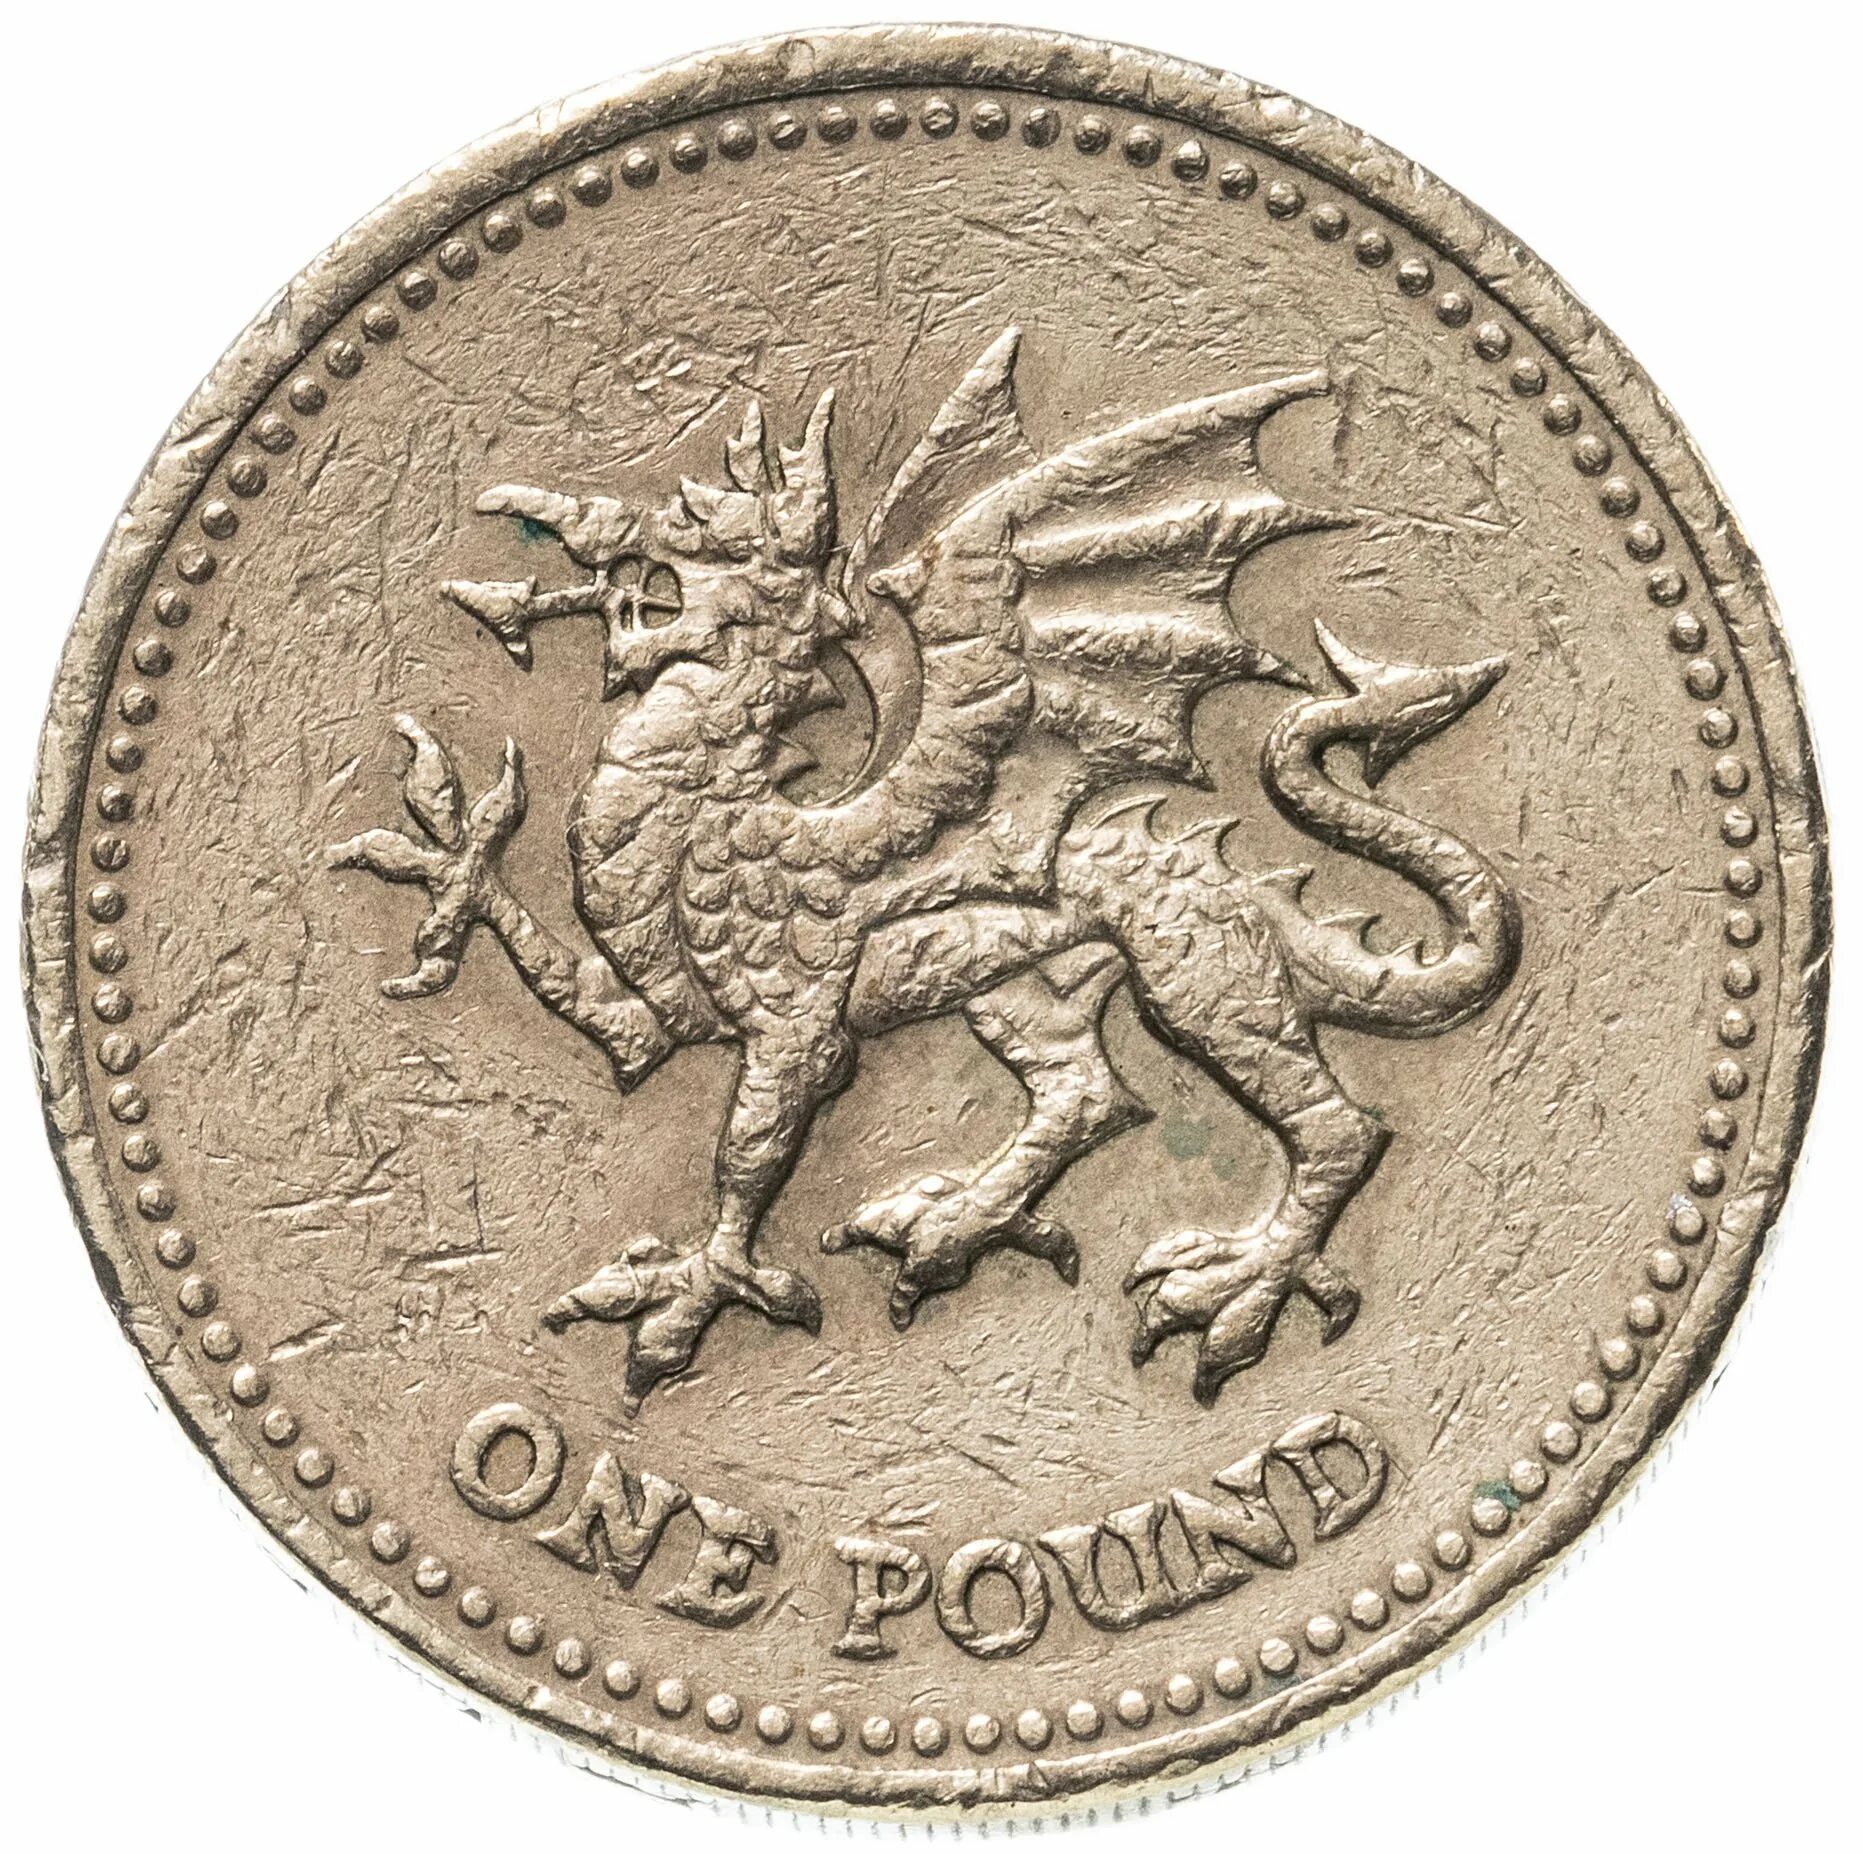 First coins. Монеты Великобритании 1 фунт. Монета 1 Паунд. Великобритания 1 фунт 1995.